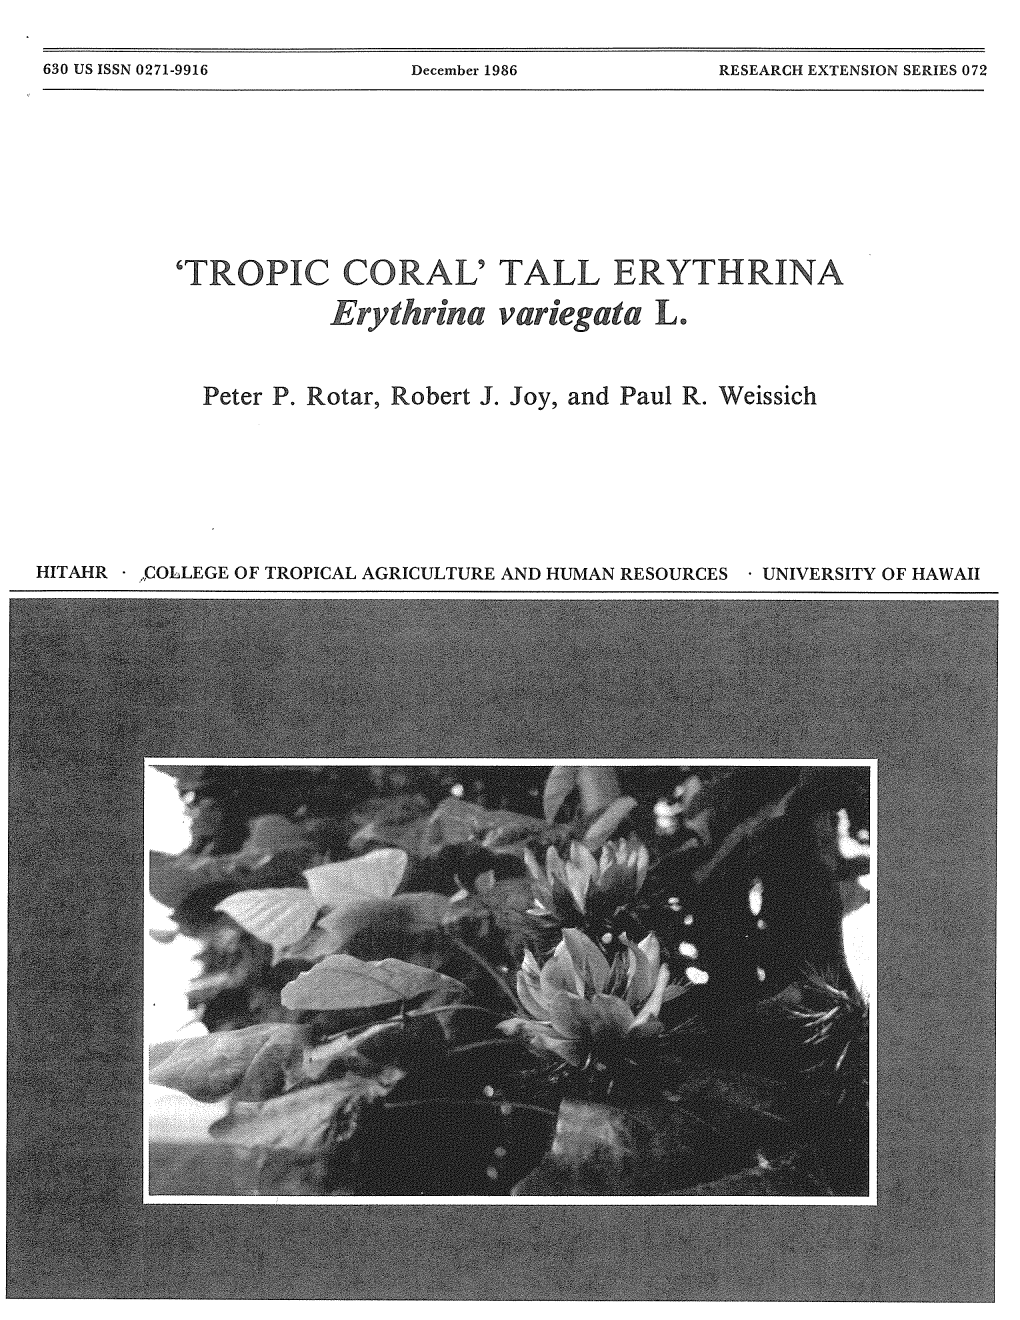 Tropic Coral Tall Erythrina (Erythrina Variegata